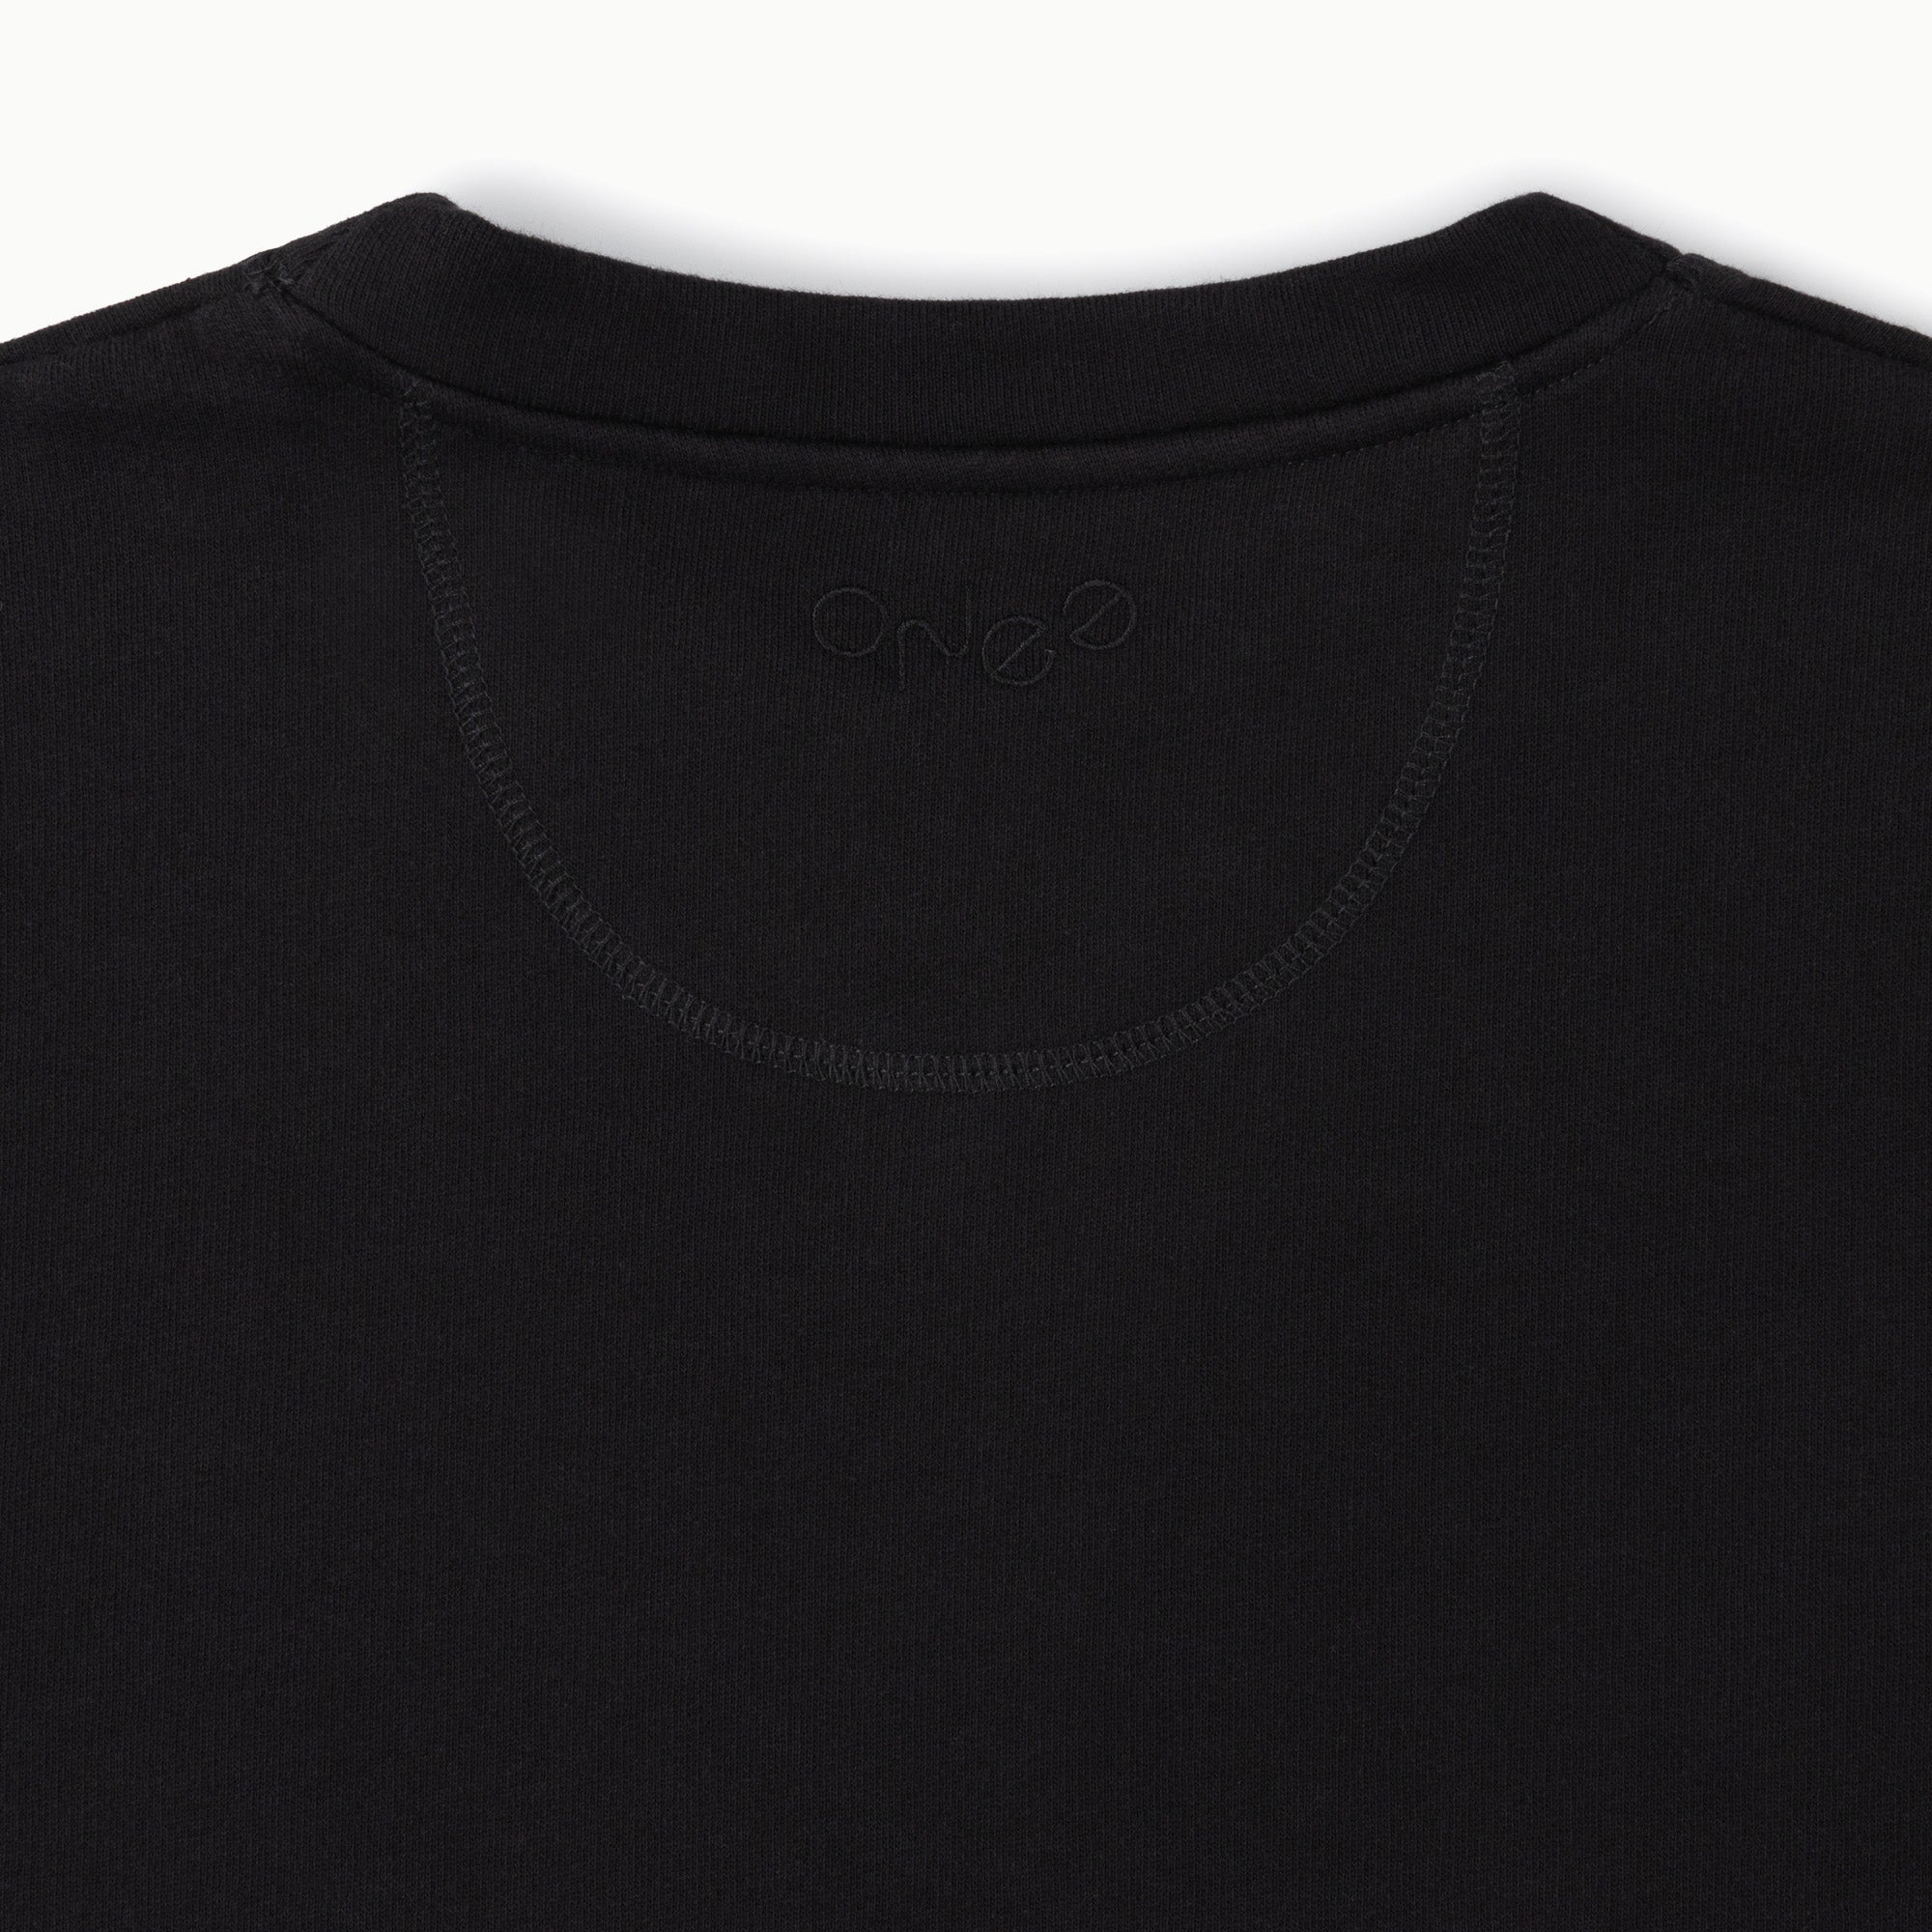 unisex black organic cotton sweatshirt back collar